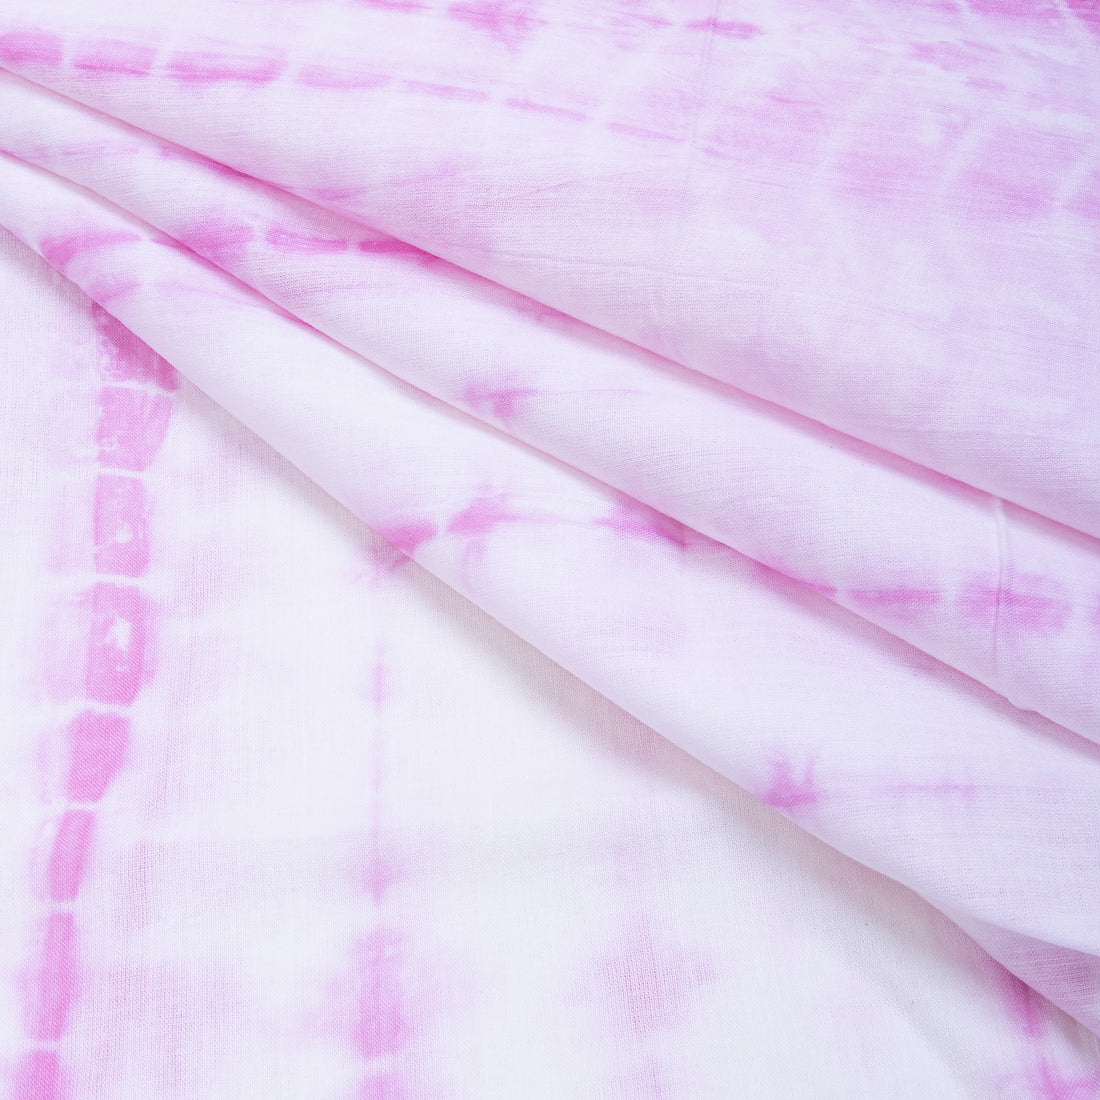 Handmade Tie Dye Cotton Fabric Online